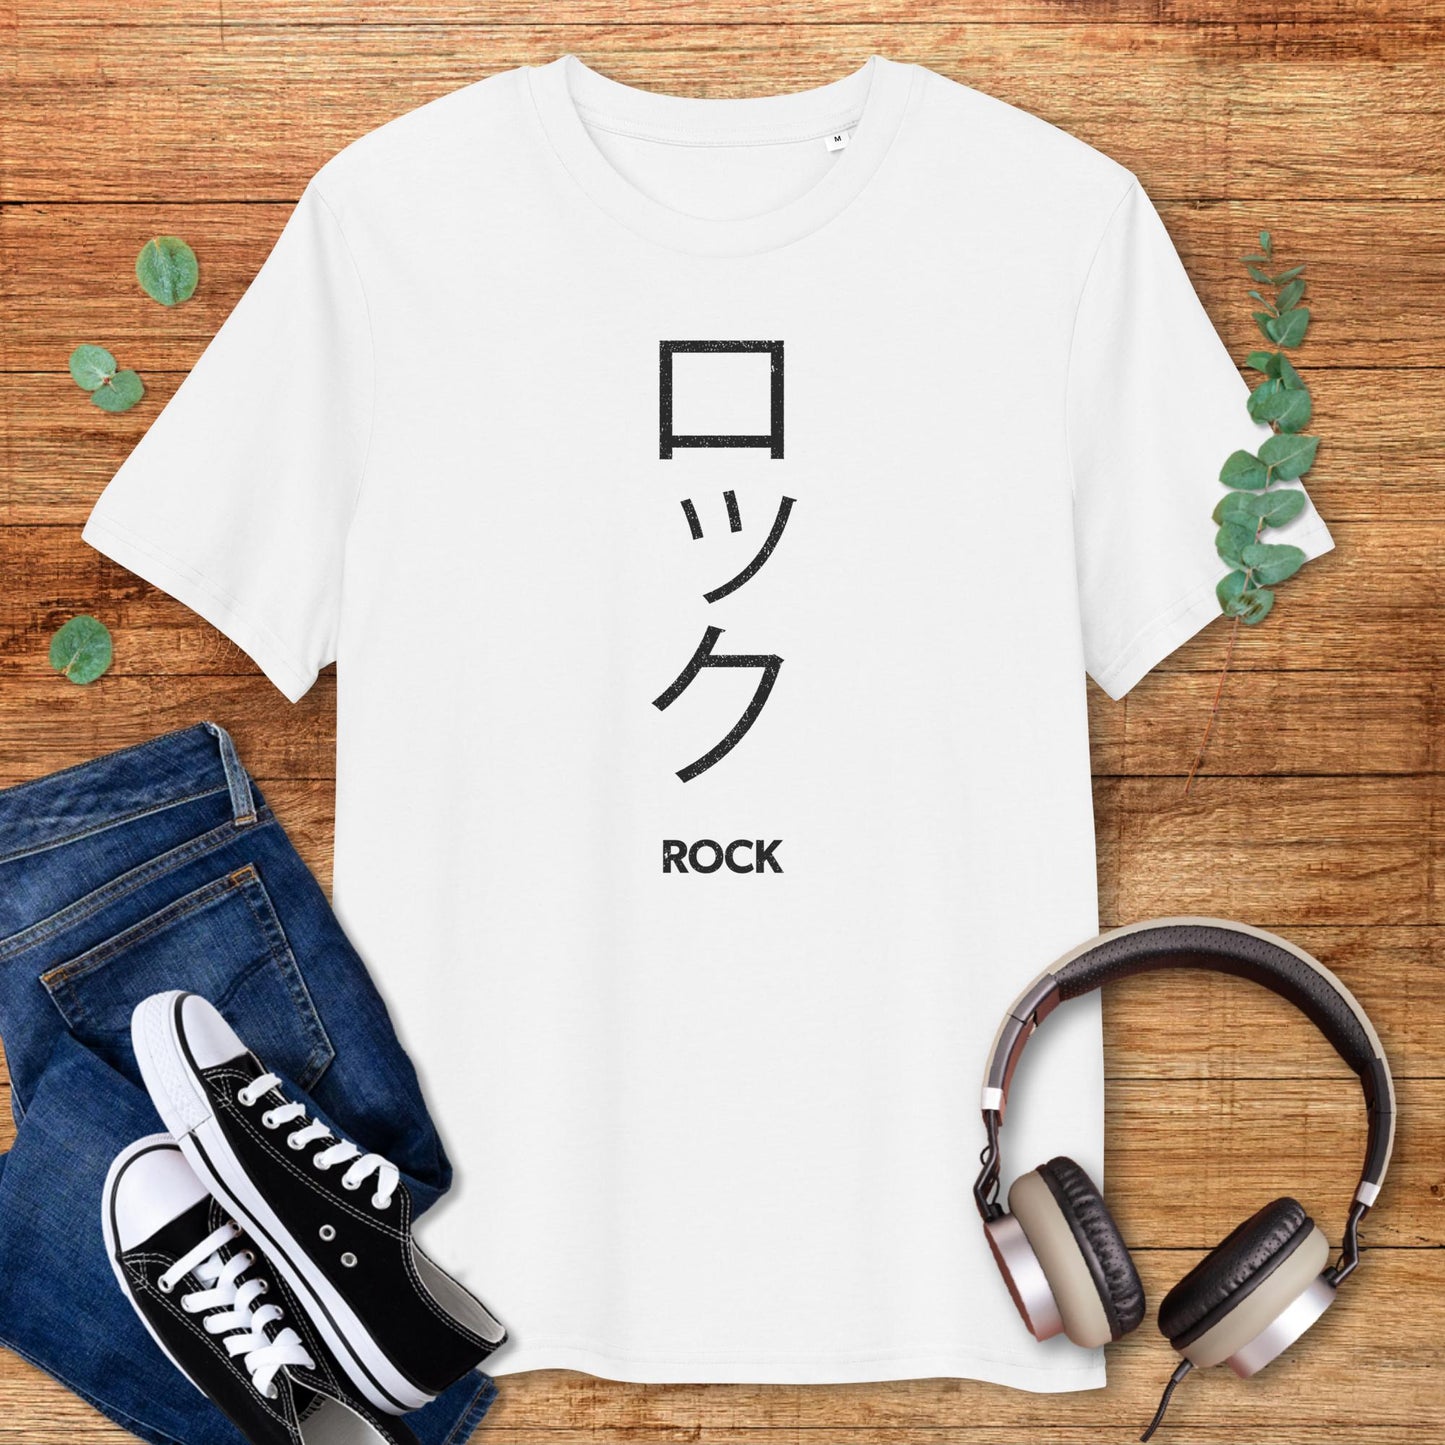 Rock in Japanese